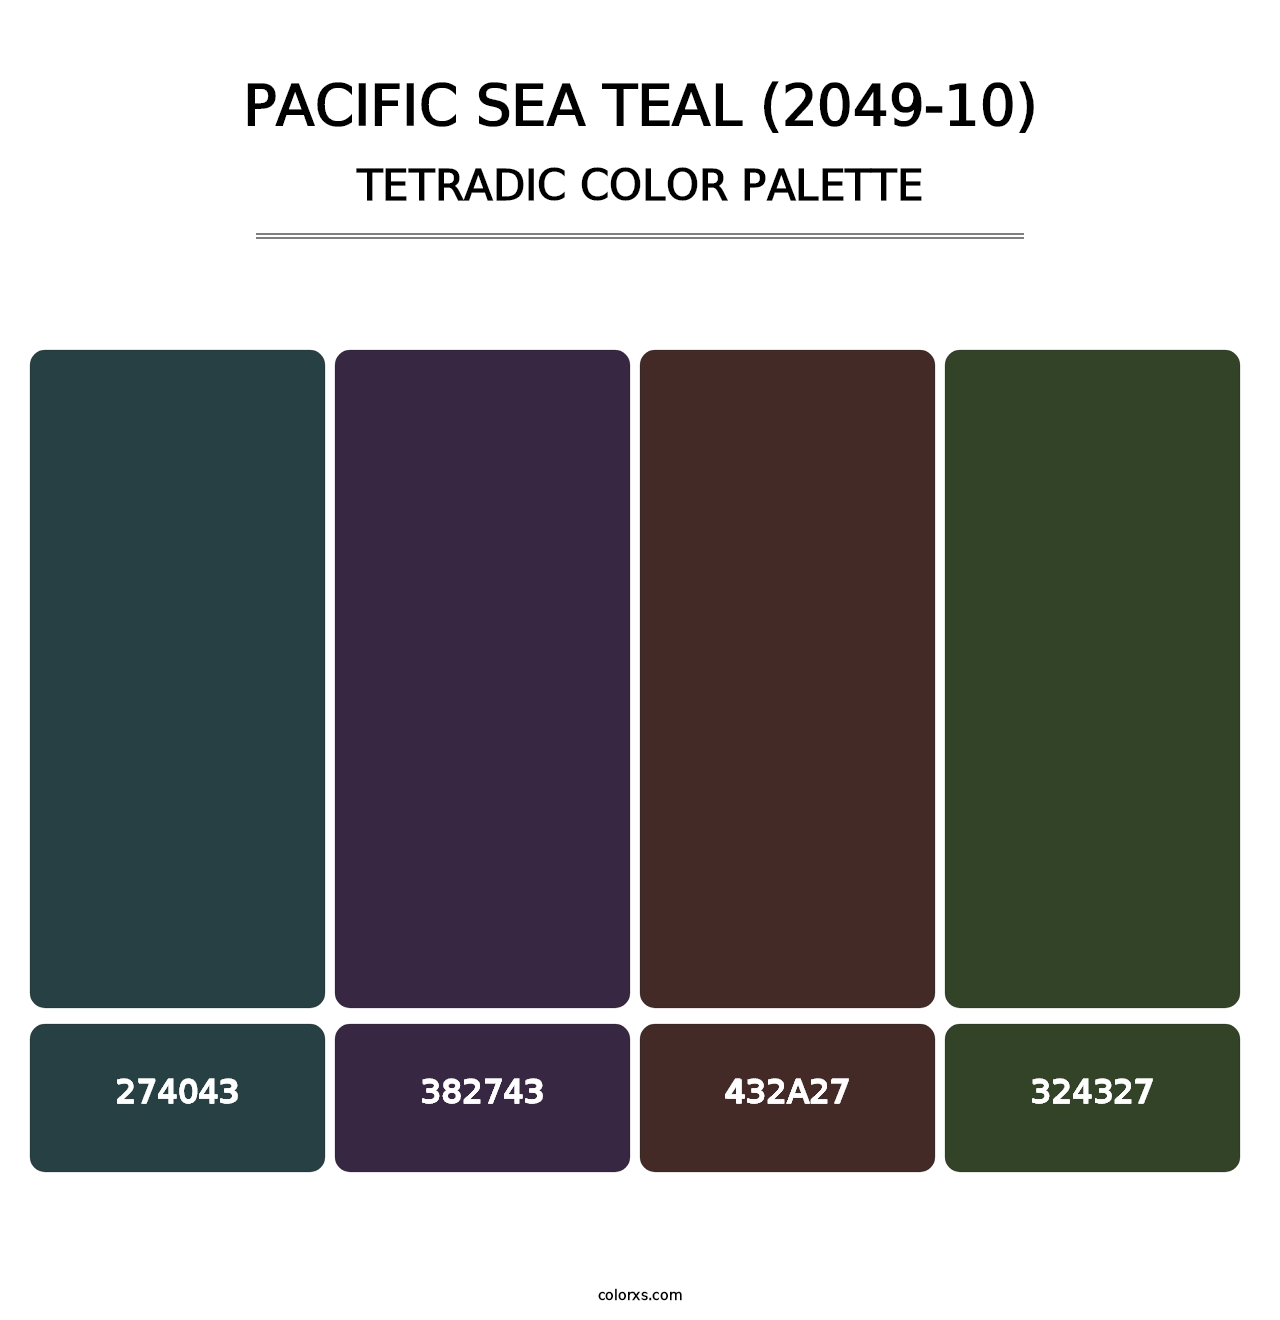 Pacific Sea Teal (2049-10) - Tetradic Color Palette